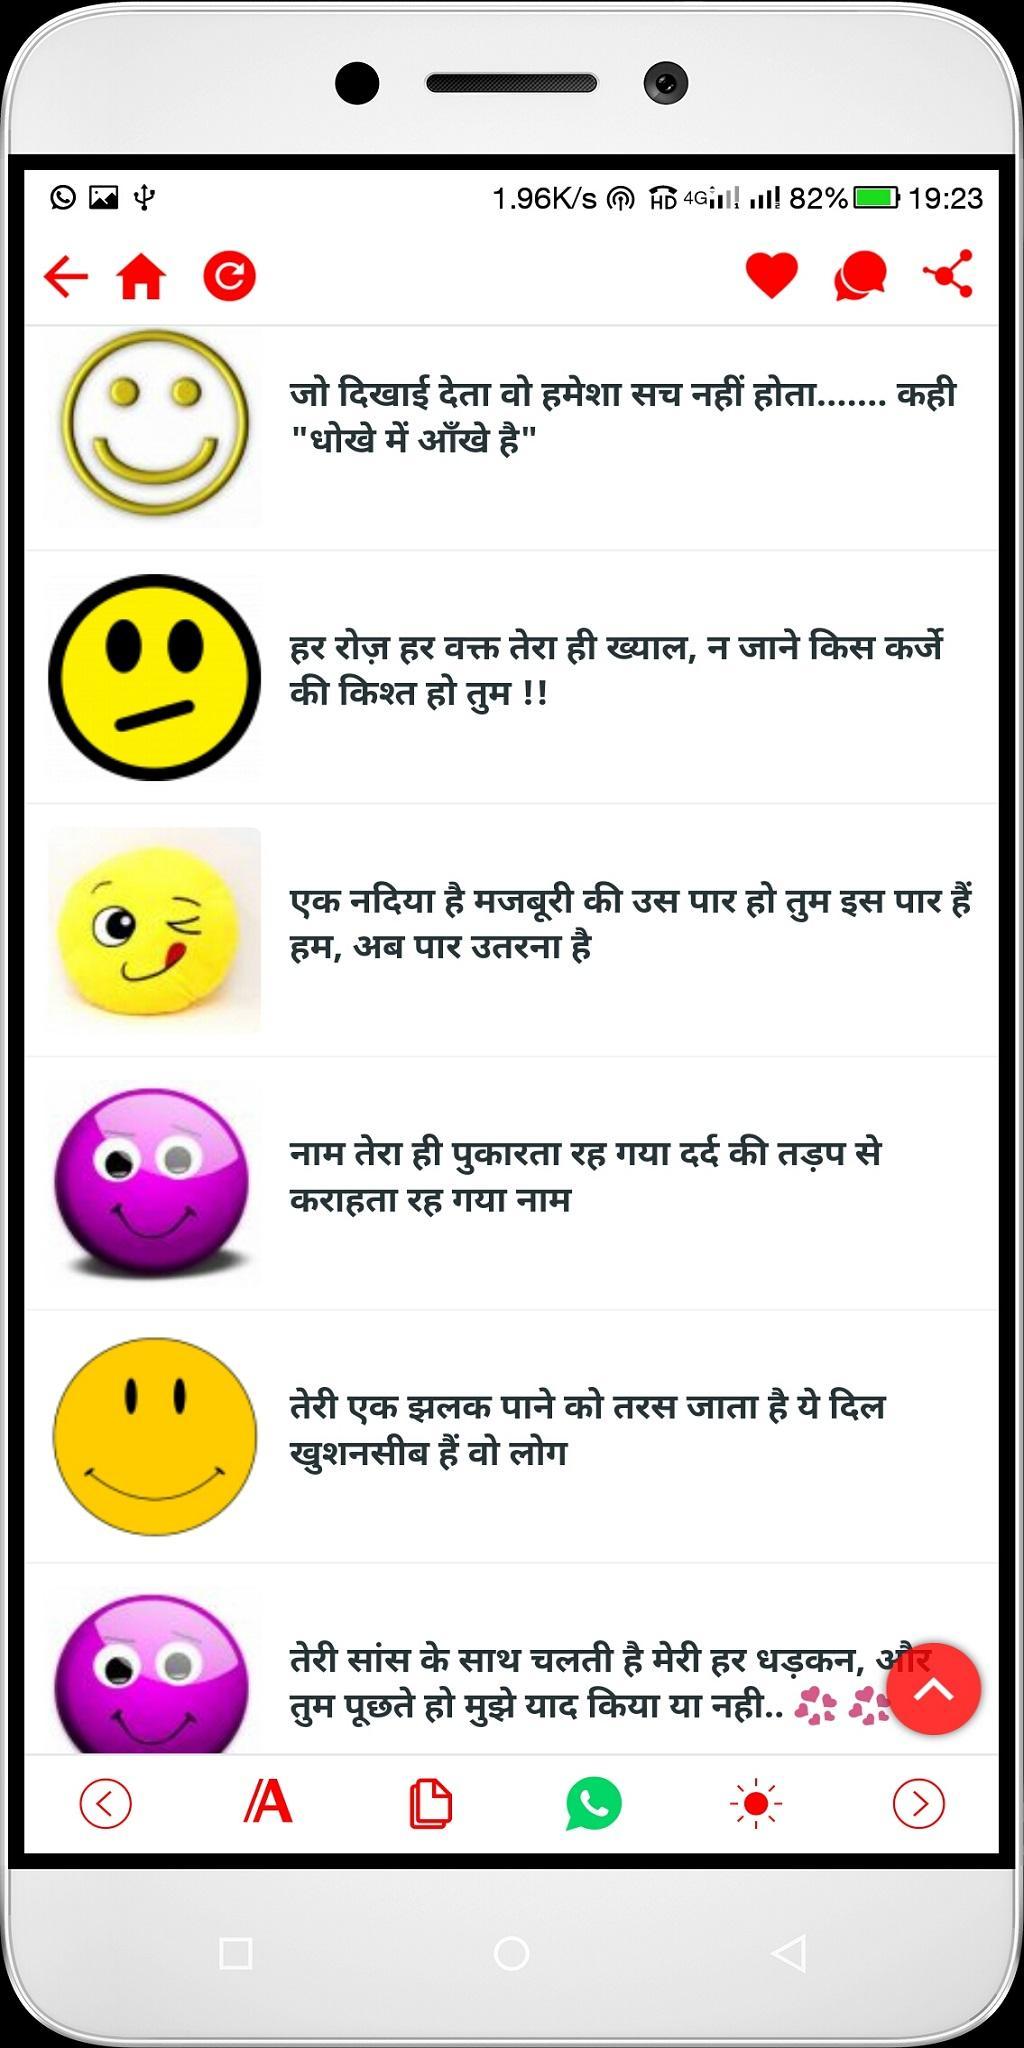 Whatsapp Funny Jokes And Shayari In Hindi For Android Apk Download